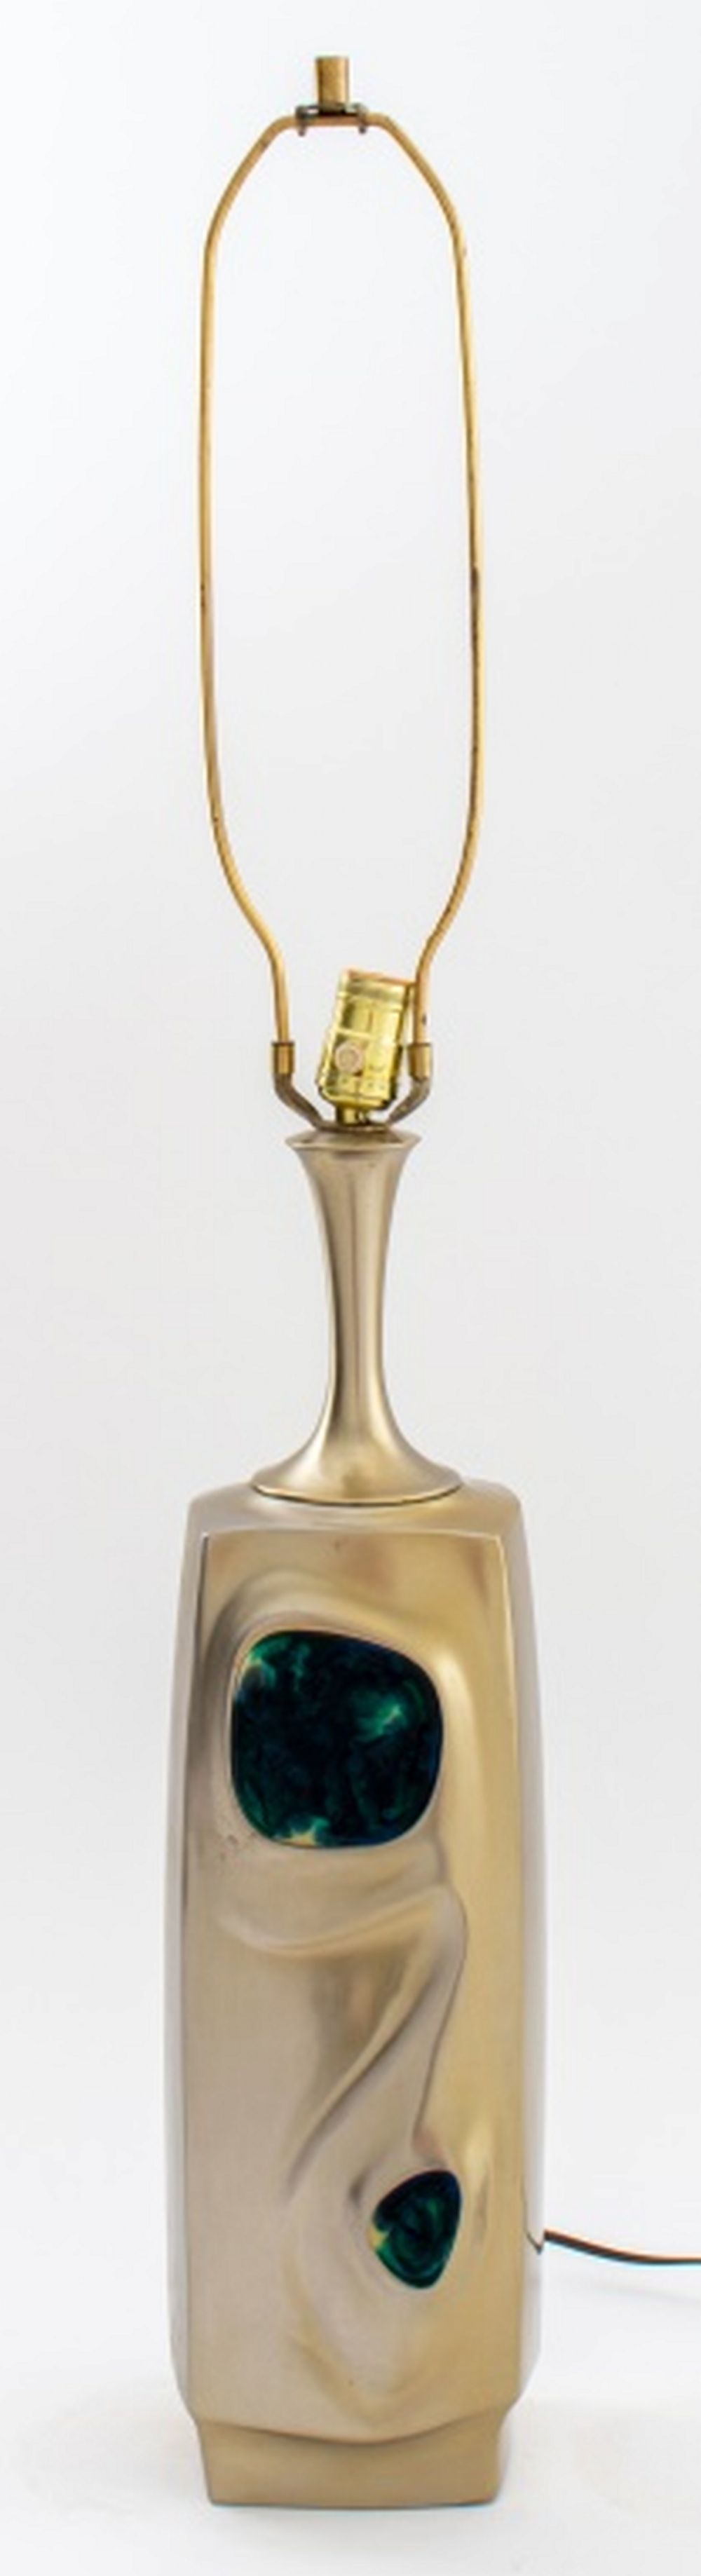 MOD 1960S STYLE GOLD TONE LAMP 3ce7f8